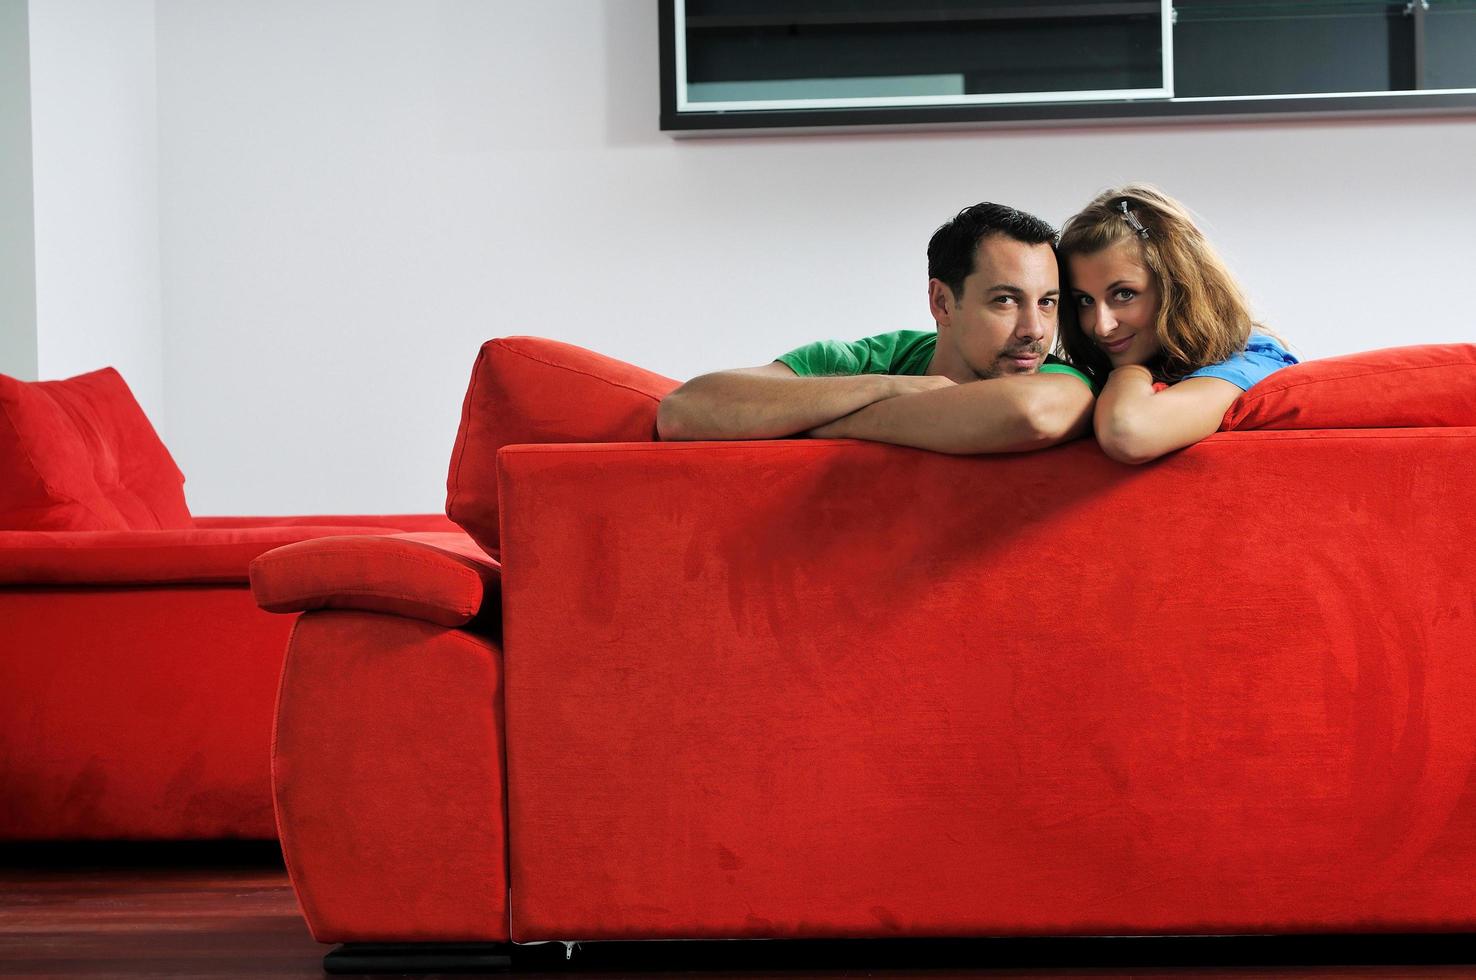 pareja feliz relajarse en el sofá rojo foto